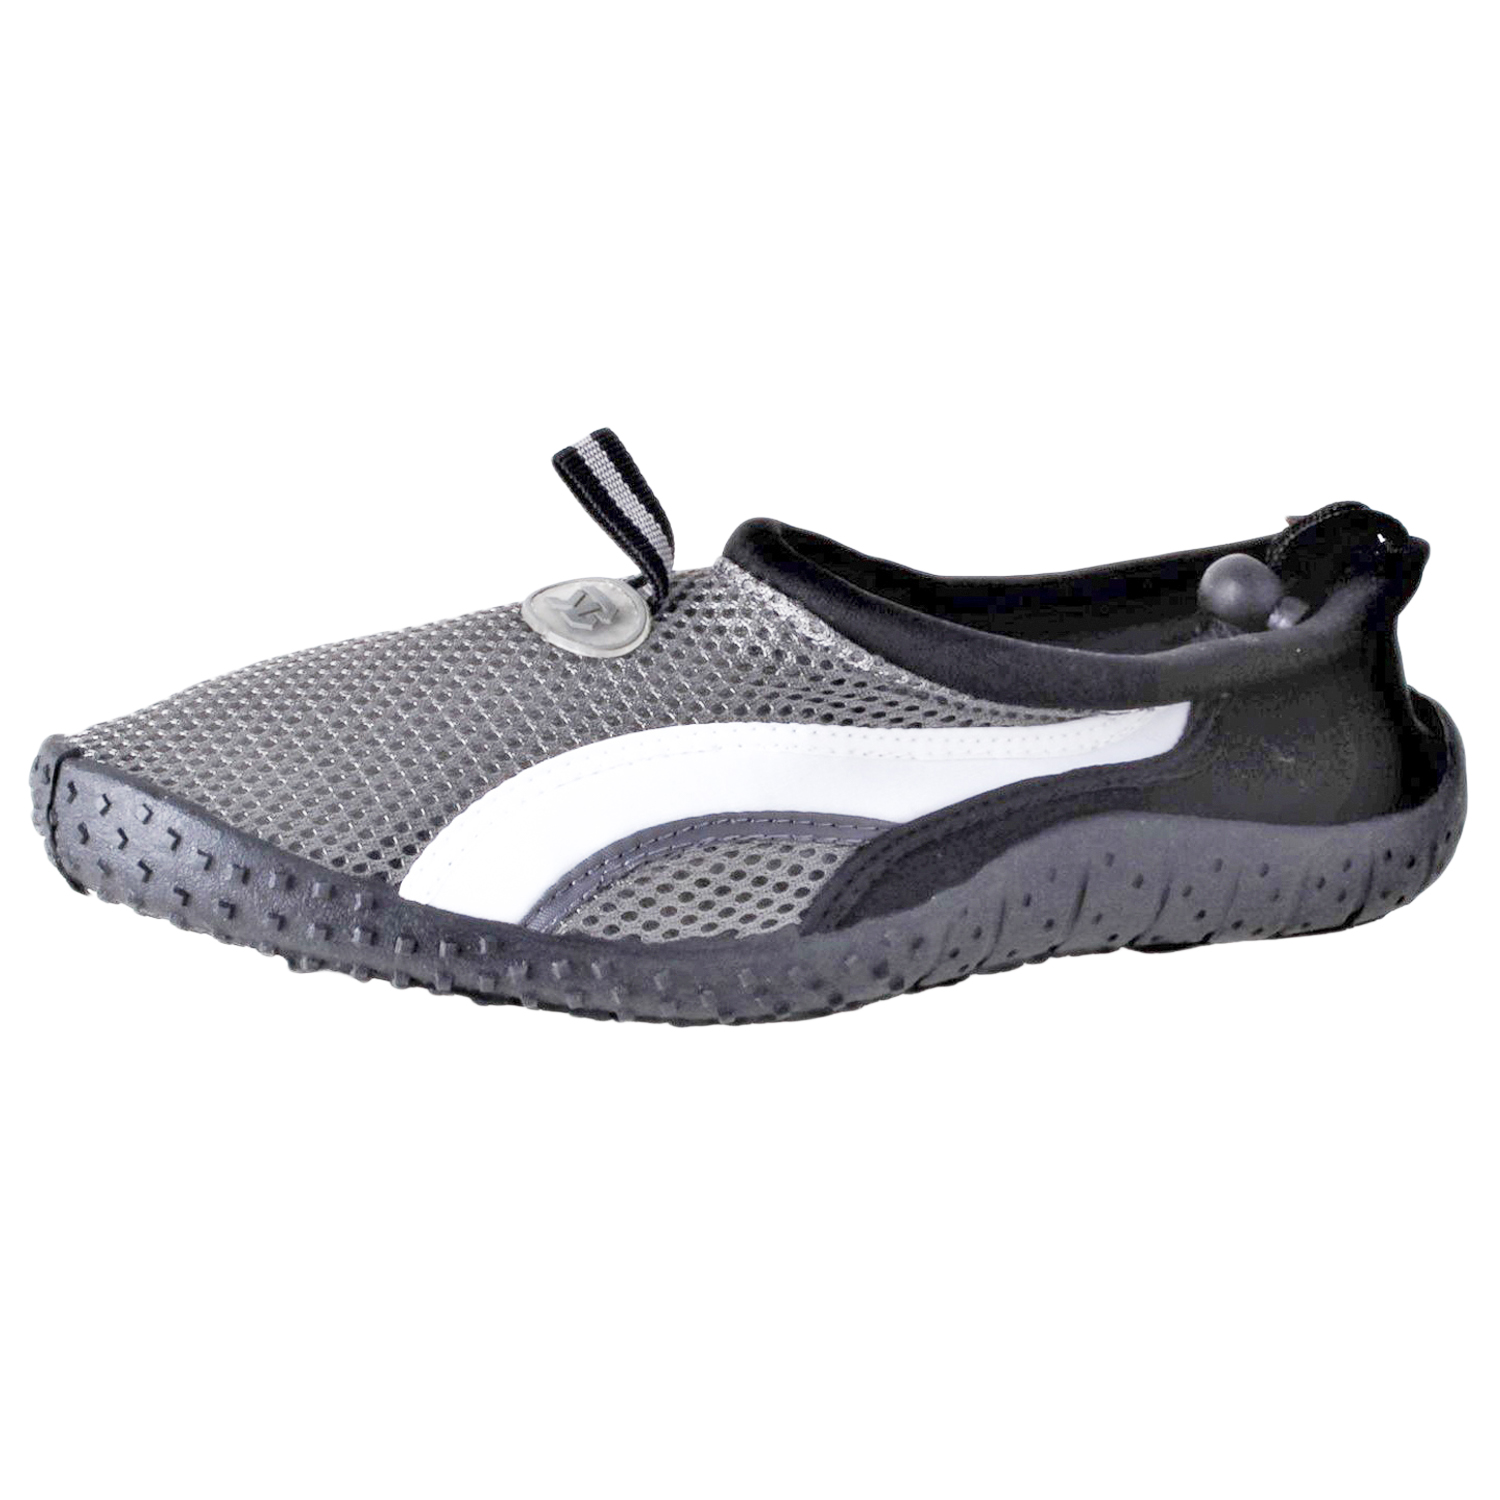 Starbay Men's Water Shoes Slip-On Grey 5908-GRY sz 7 | eBay